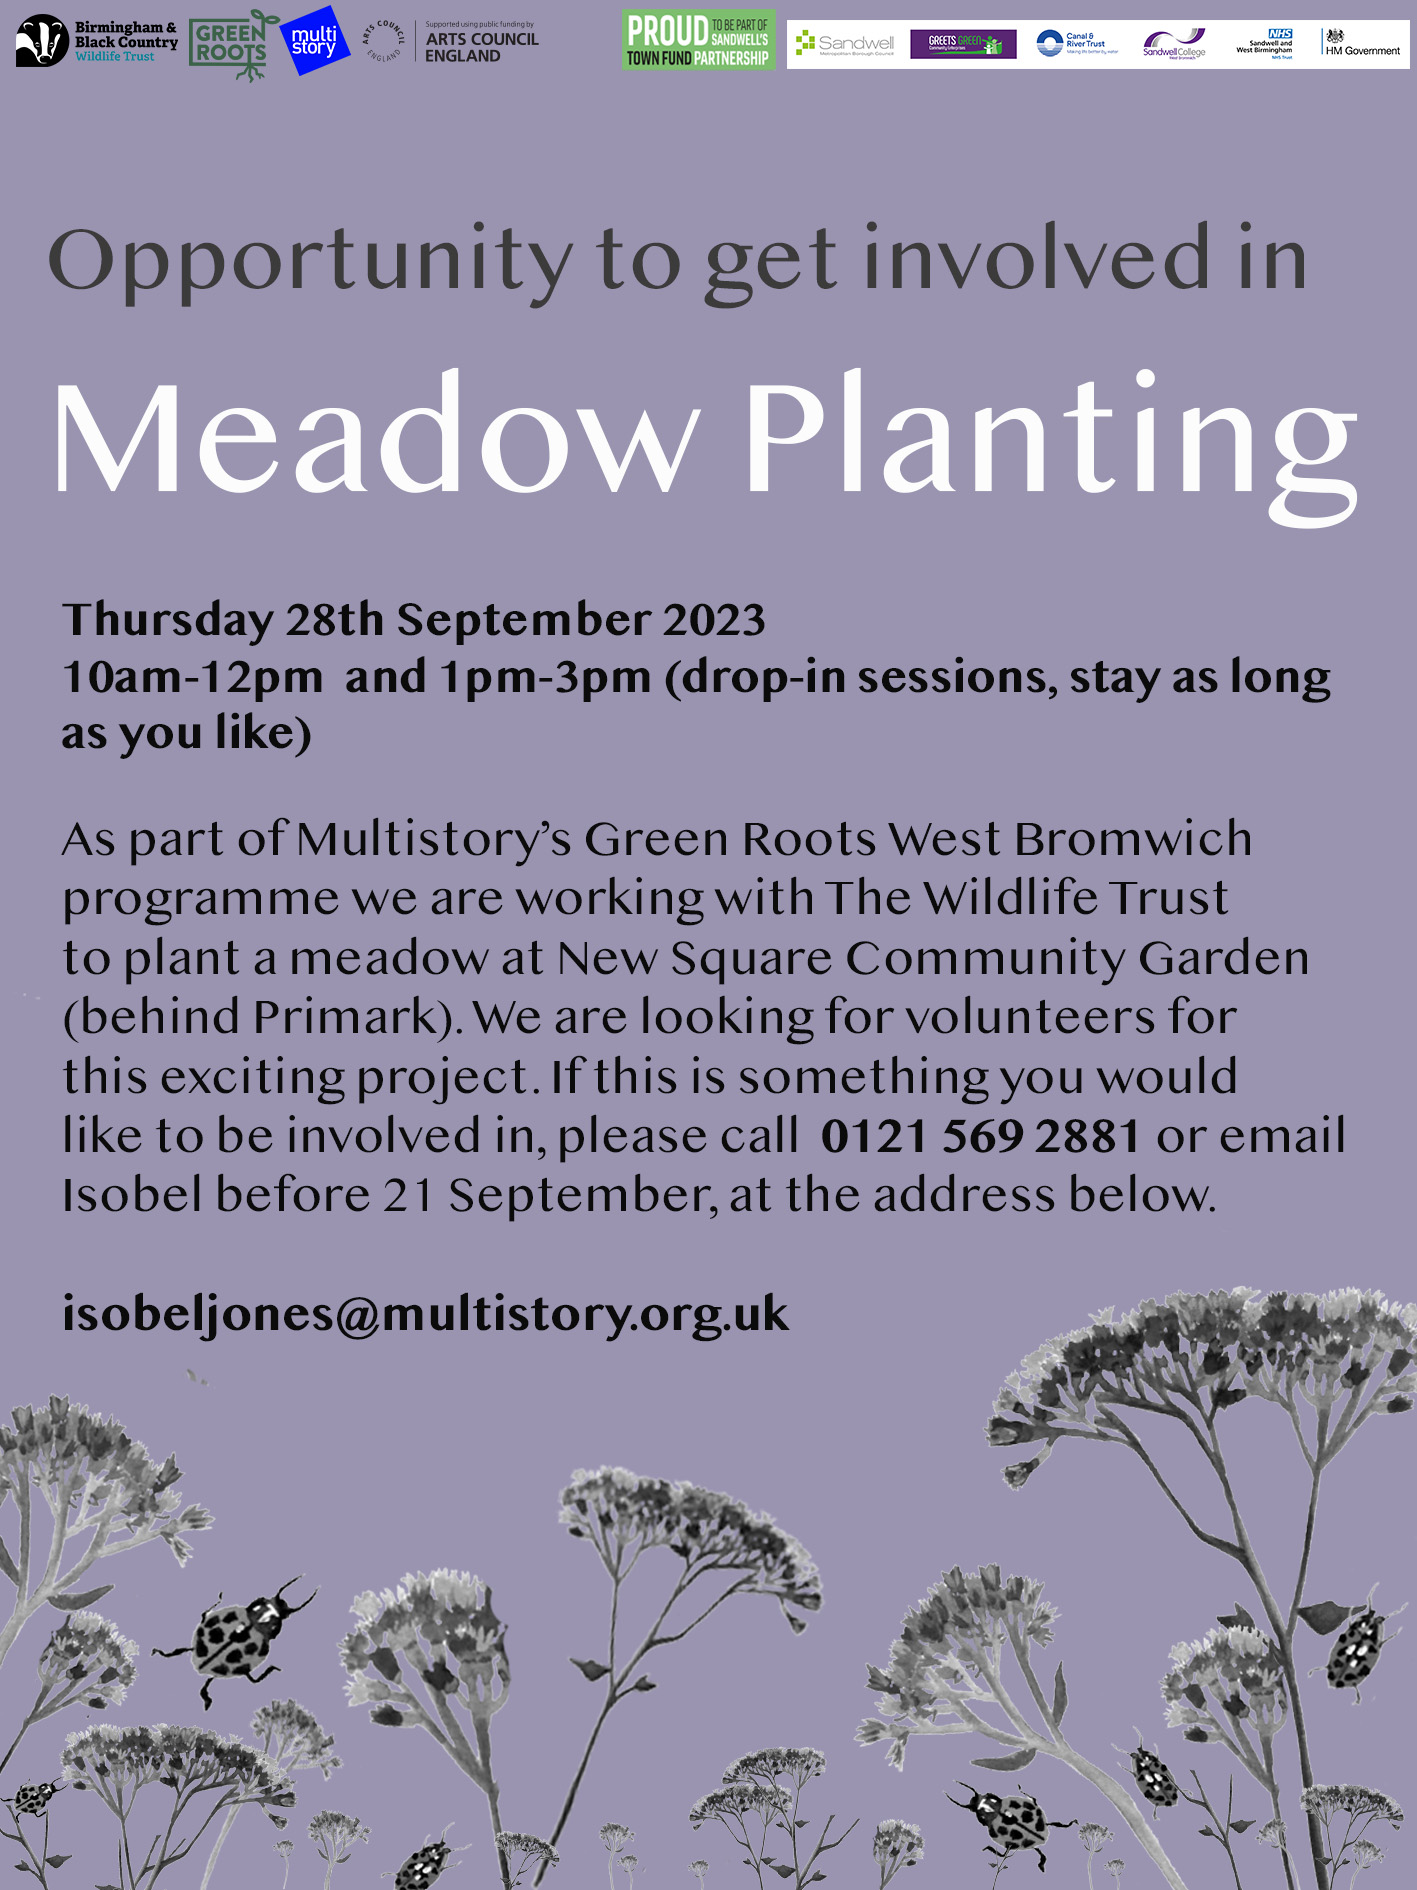 Meadow Planting are looking for volunteers